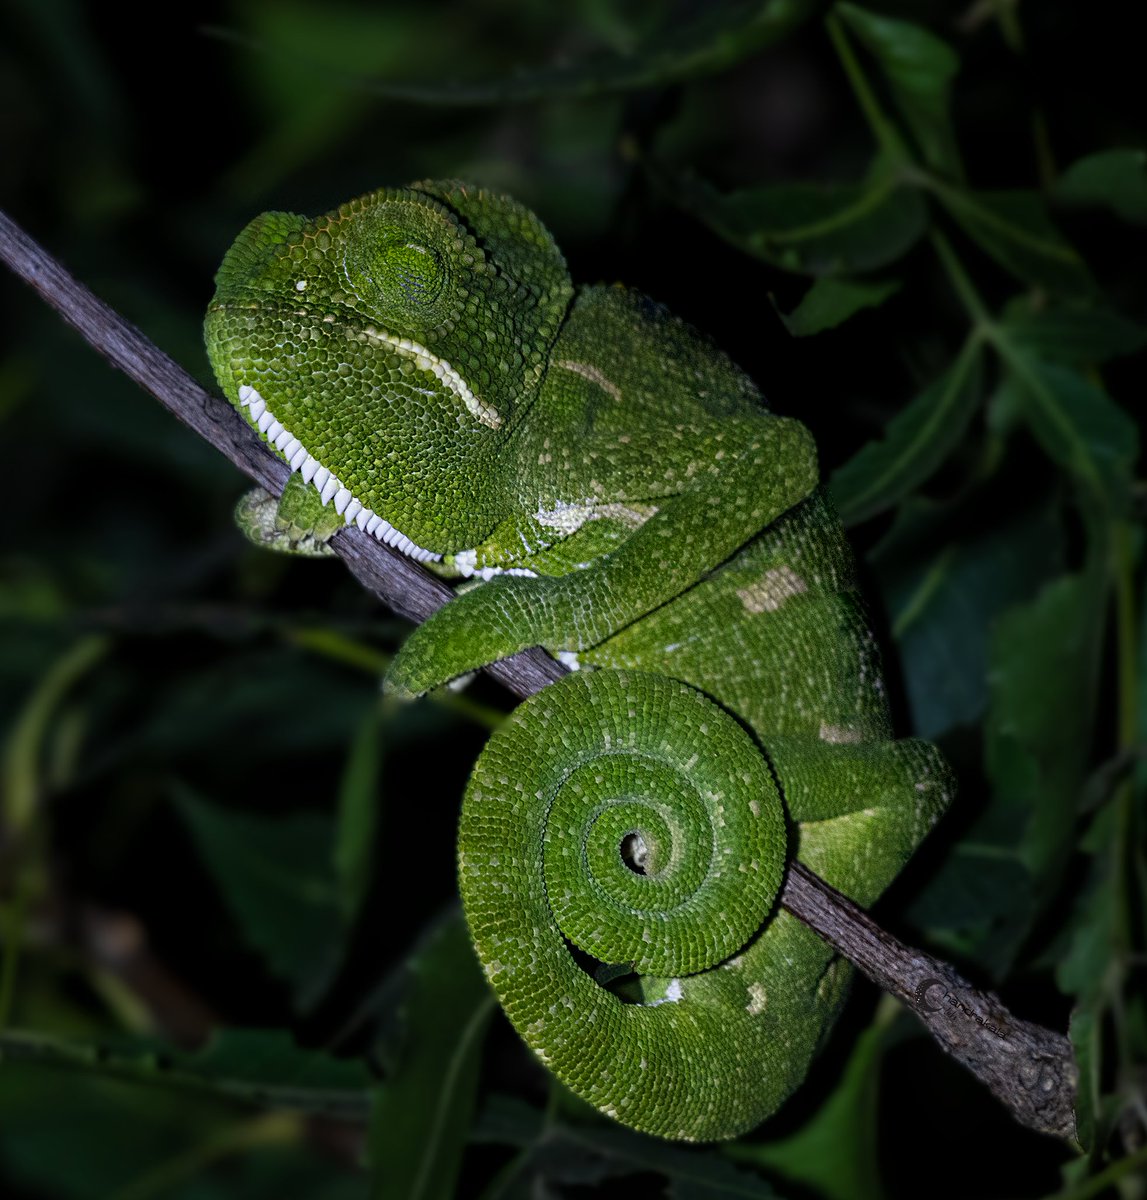 Indian Chameleon - the green marvel for #Indiaves midweek theme #AnythingButBirds 
#indiwild #Reptiles #BBCWildlifePOTD #Nifhivefeature